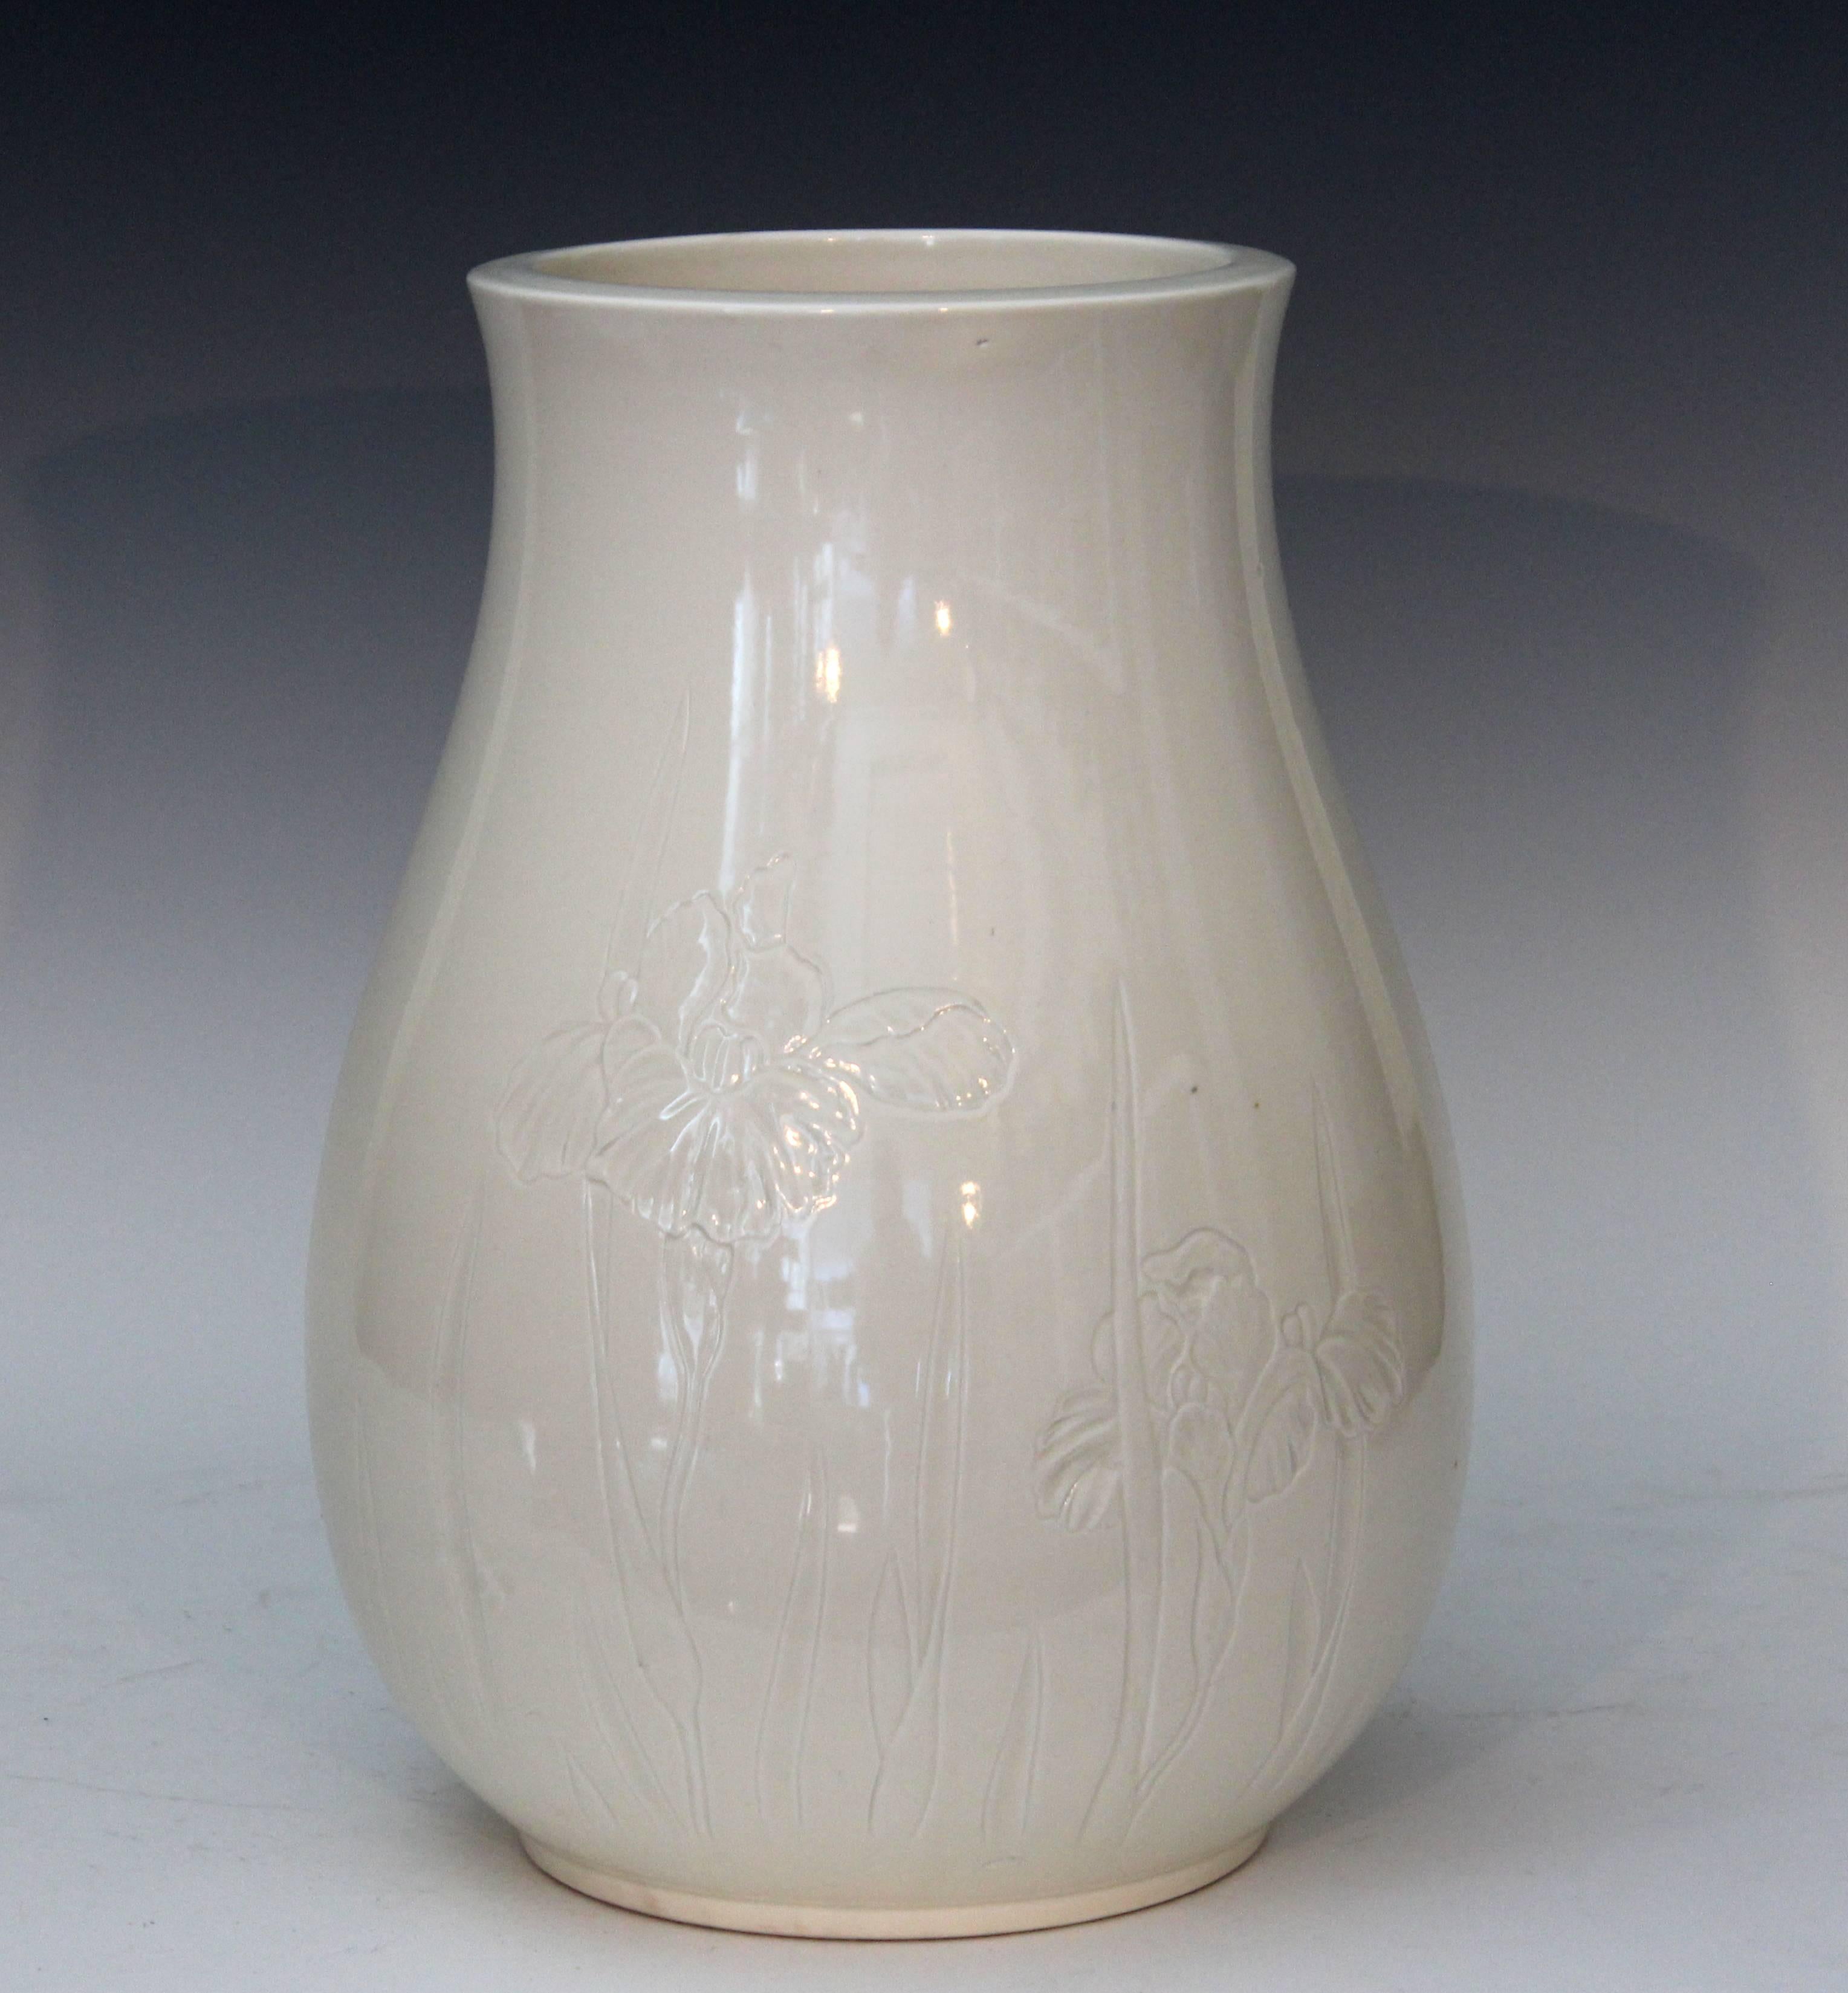 Antique Japanese Studio porcelain Blanc de Chine vase with subtly carved iris decoration, circa 1900. Measures: 12 1/4